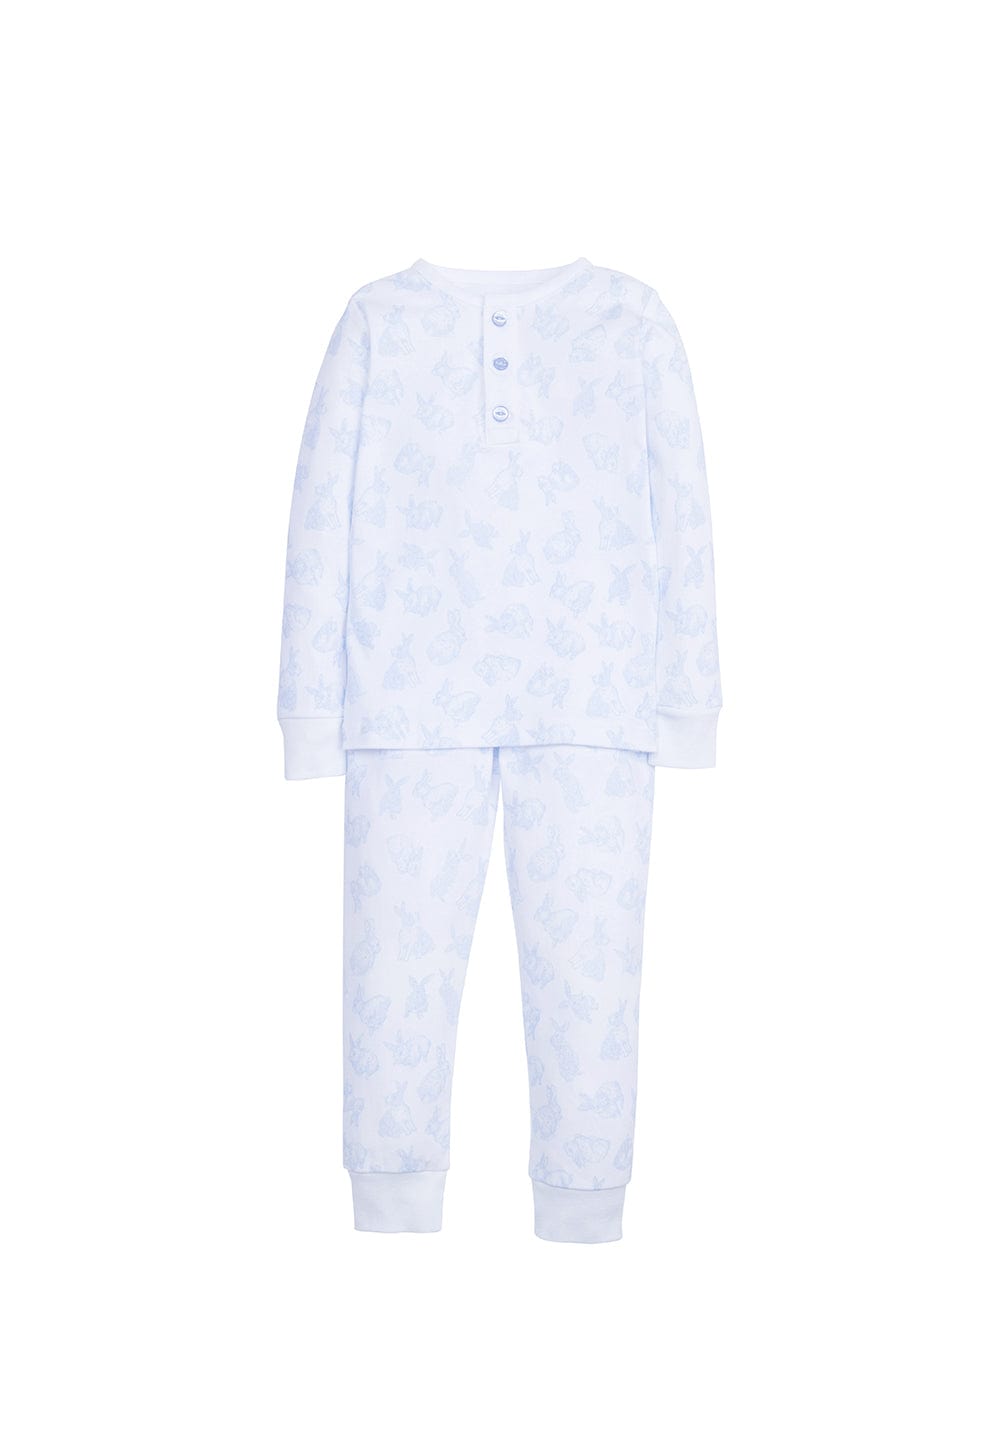 classic childrens clothing boys pajamas set with light blue bunny print